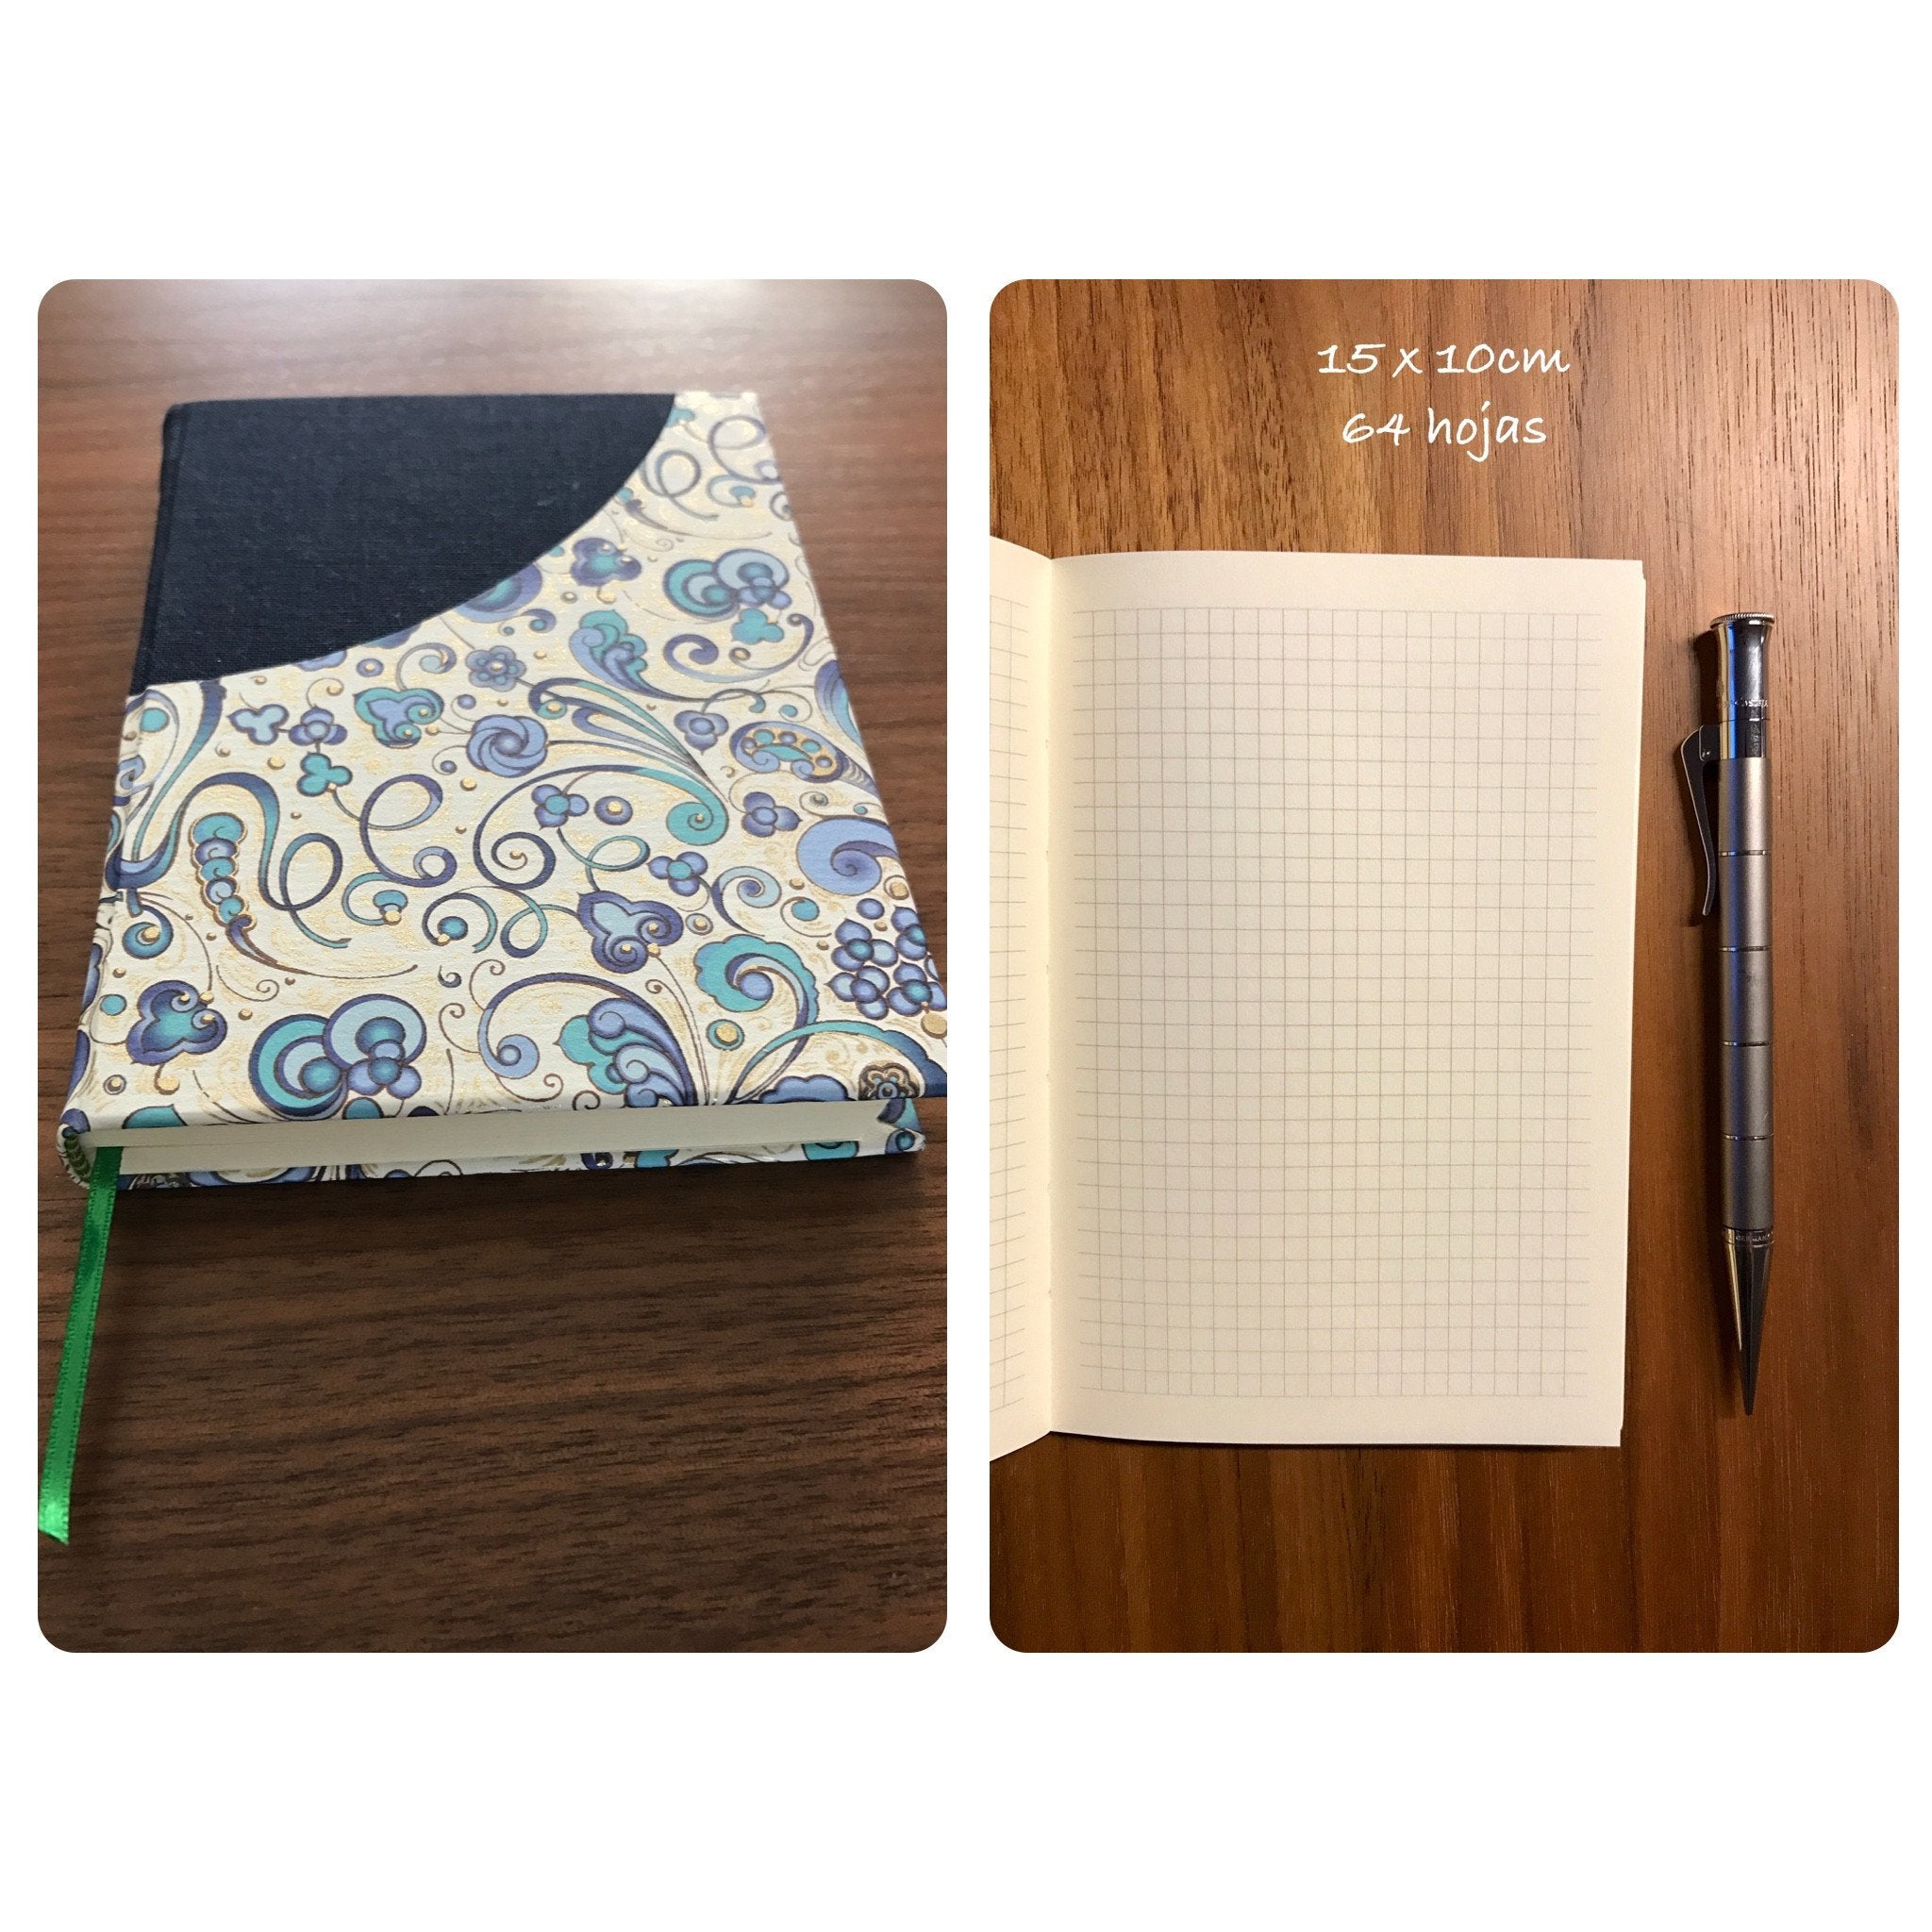 Cuaderno en papel Italiano & tela azul - Black Sheep Handmade